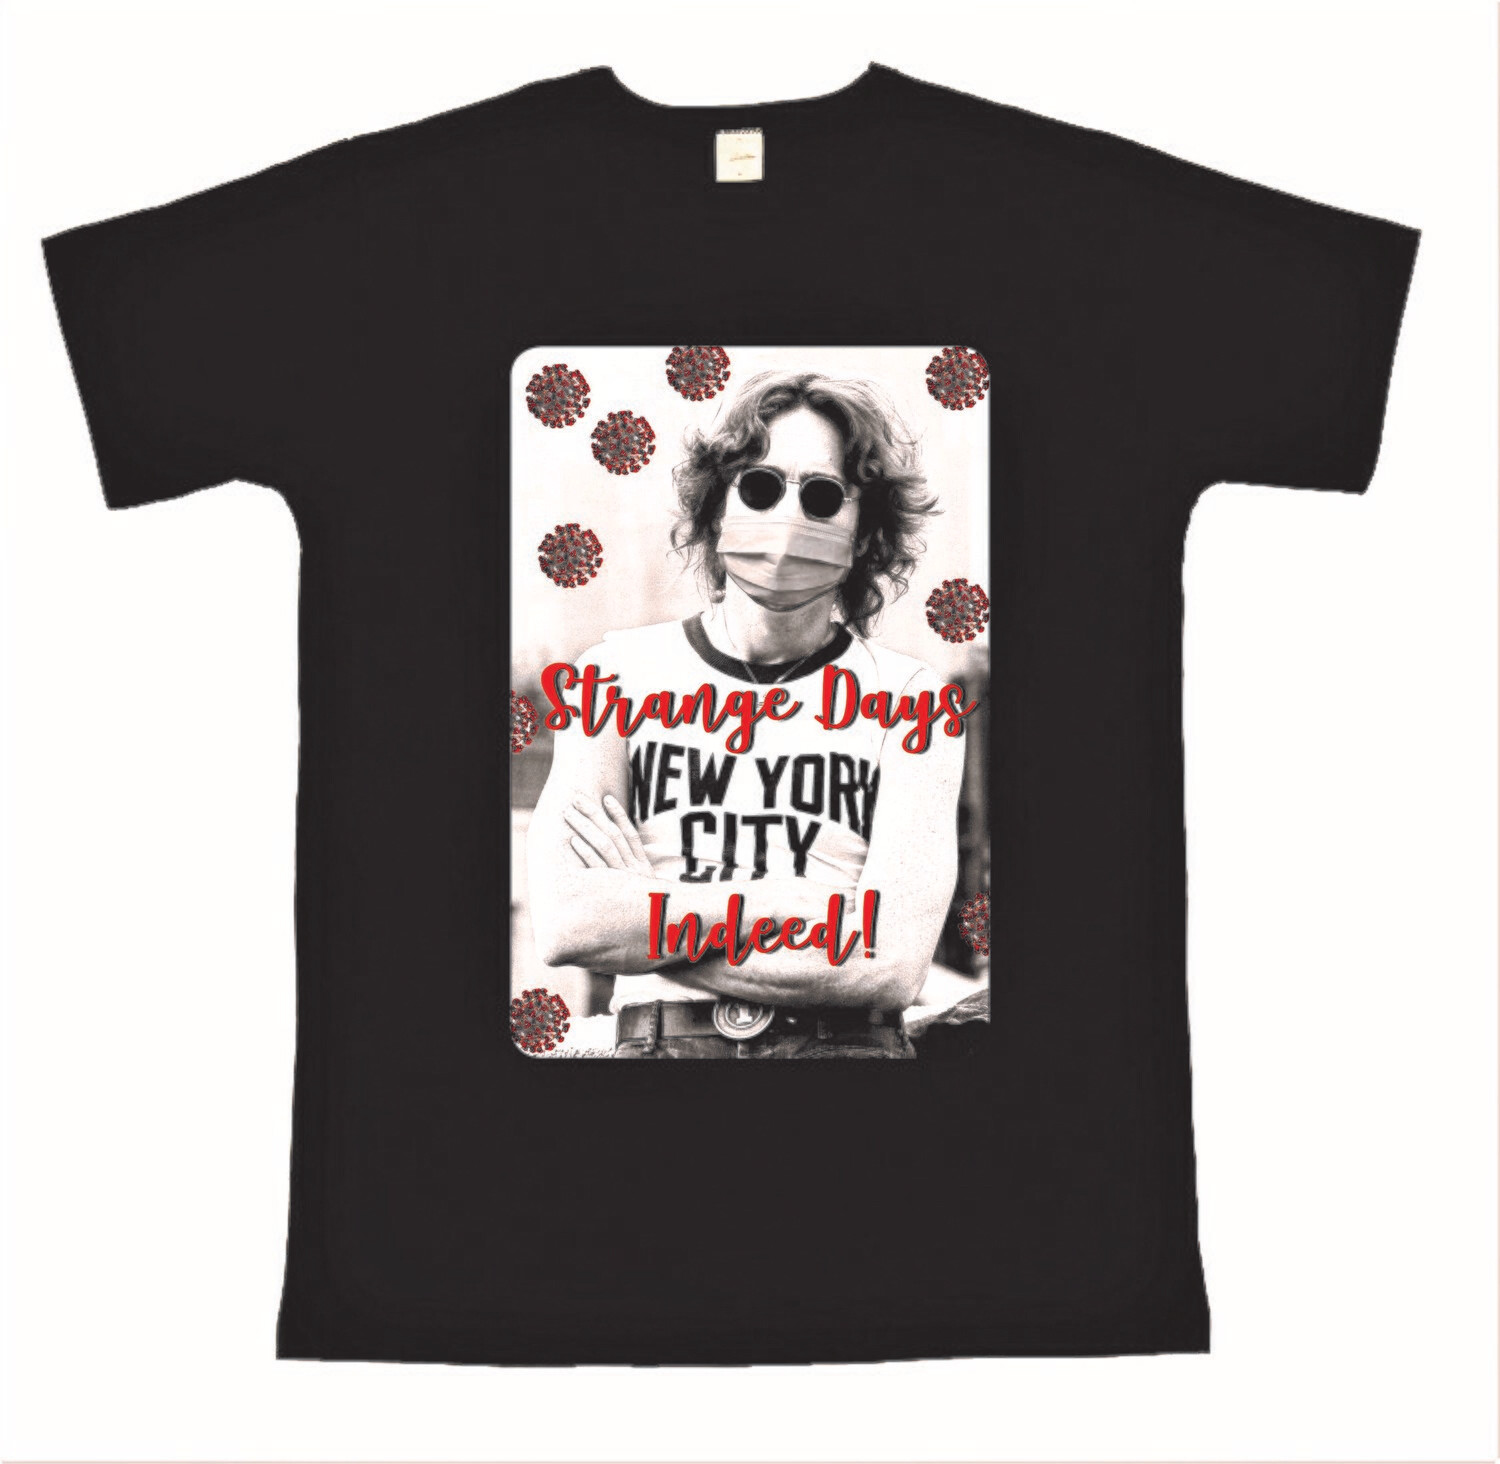 Strange Days John Lennon with Mask tee-shirt. In-store pick-up price.